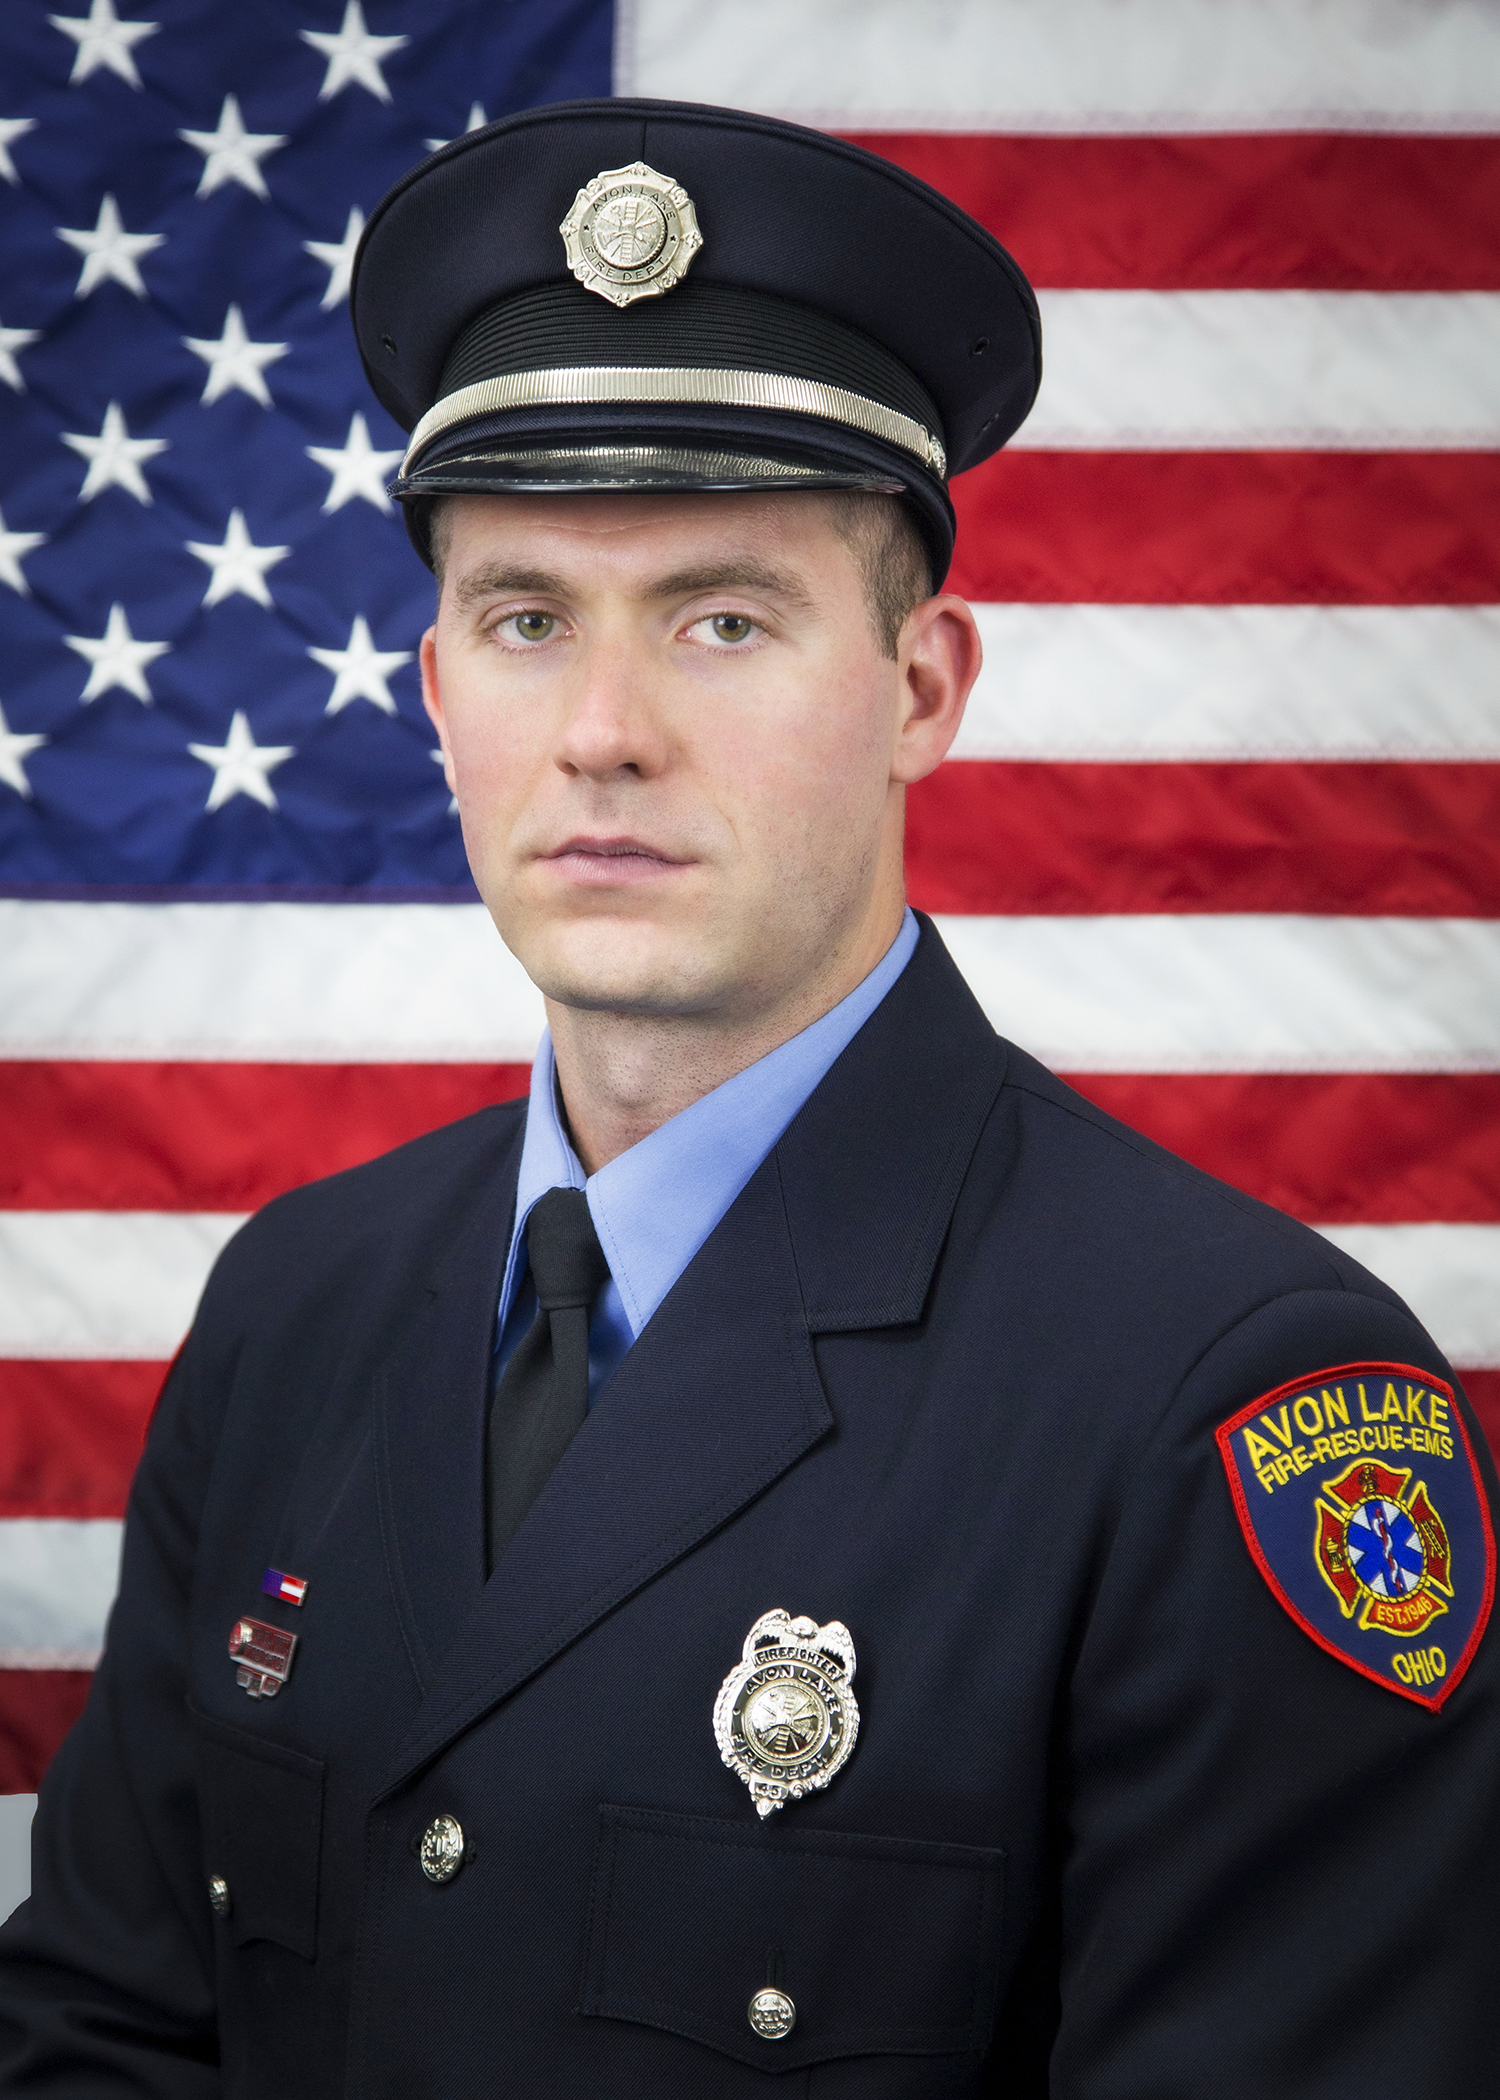 Firefighter/Paramedic Mike Pertz